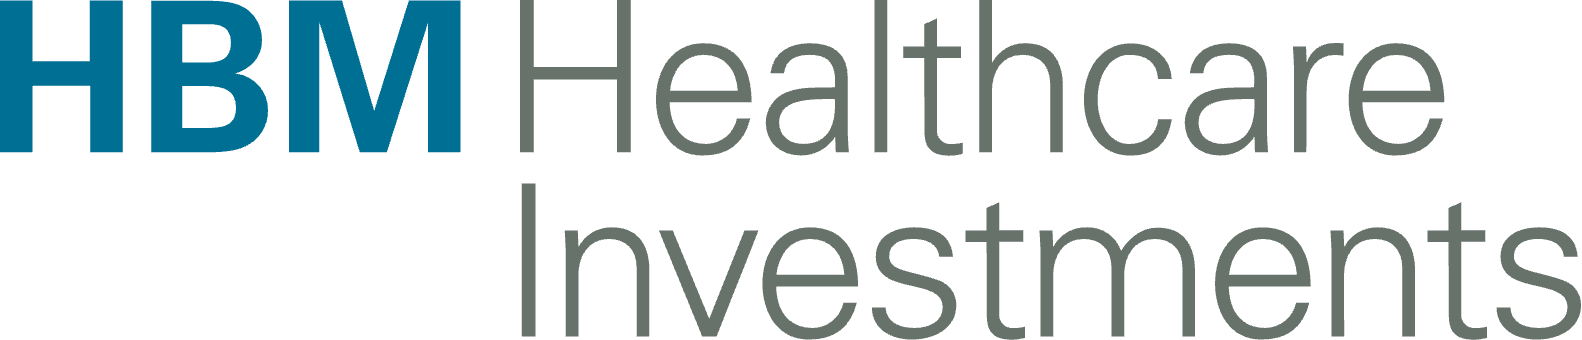 HBM Healthcare Investments logo large (transparent PNG)